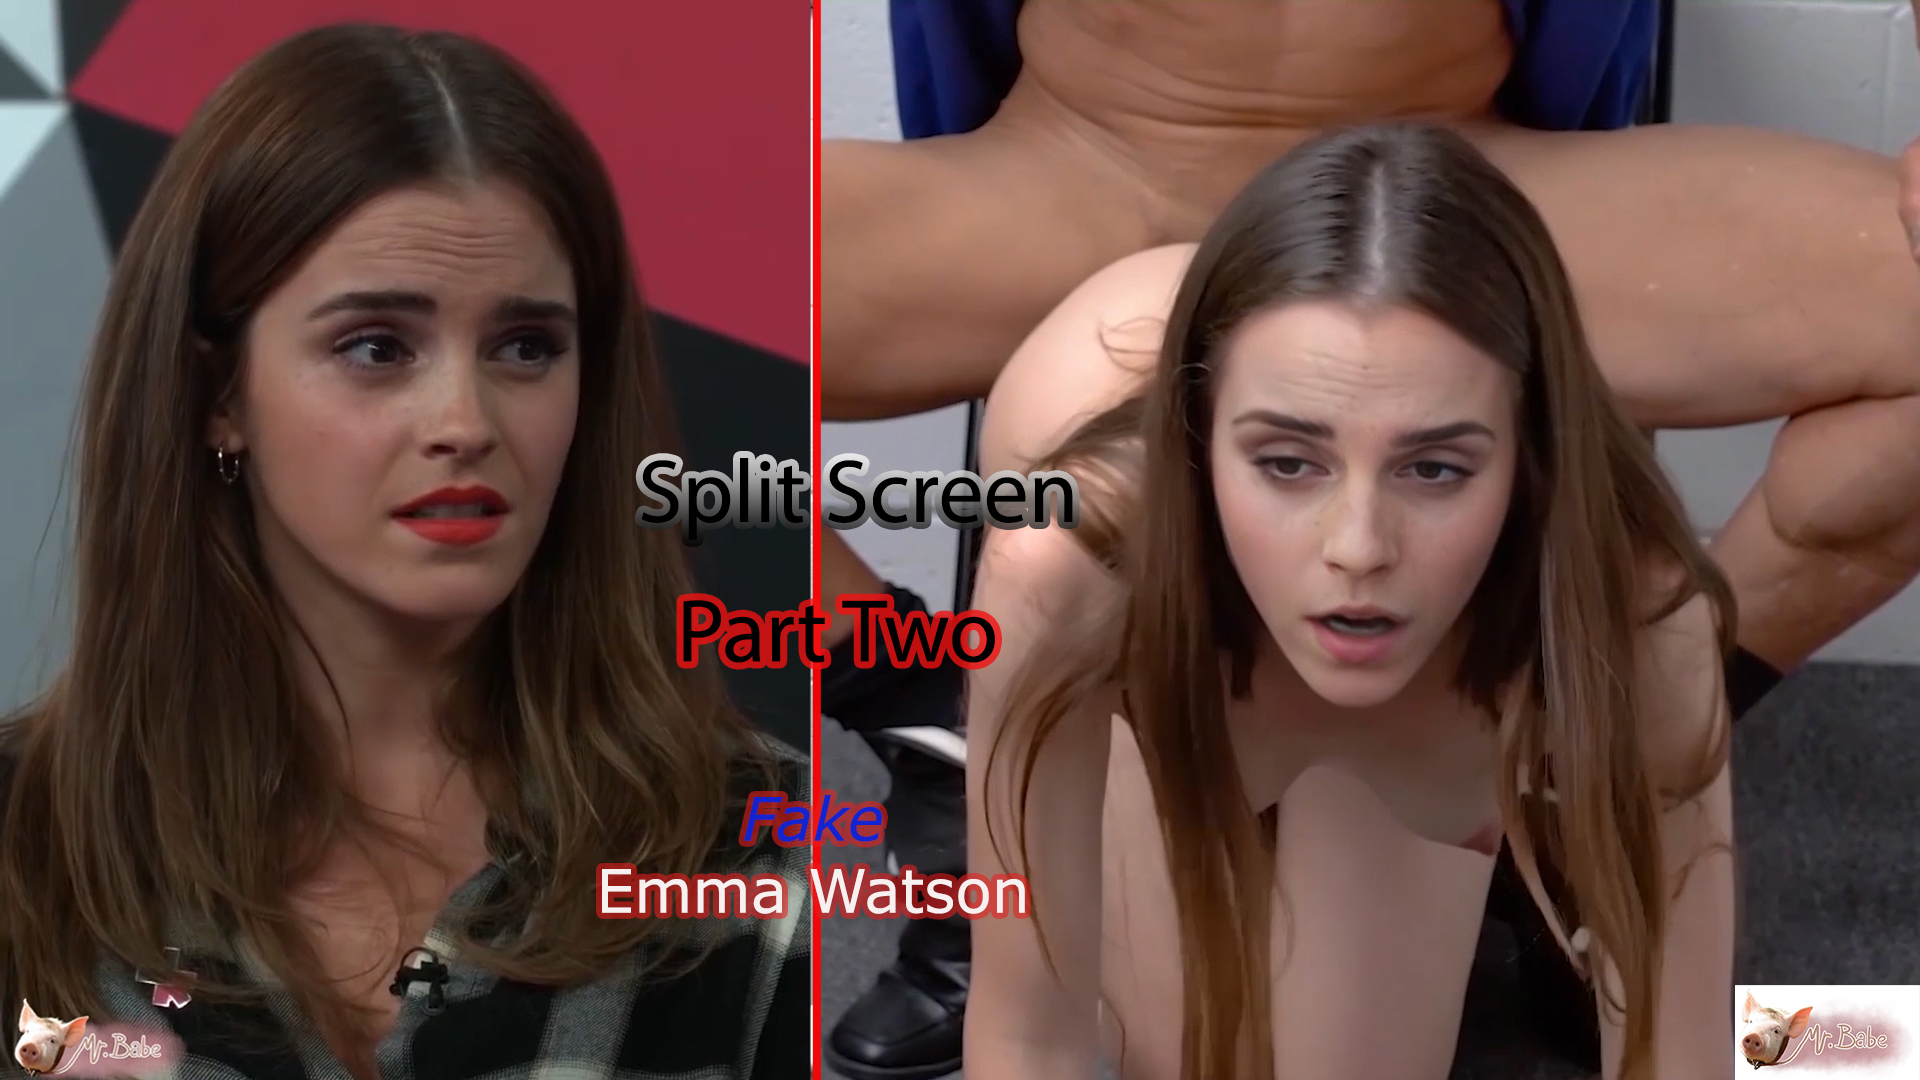 Fake Emma Watson -(trailer) -2- Part-2 / Split Screen / Free Download